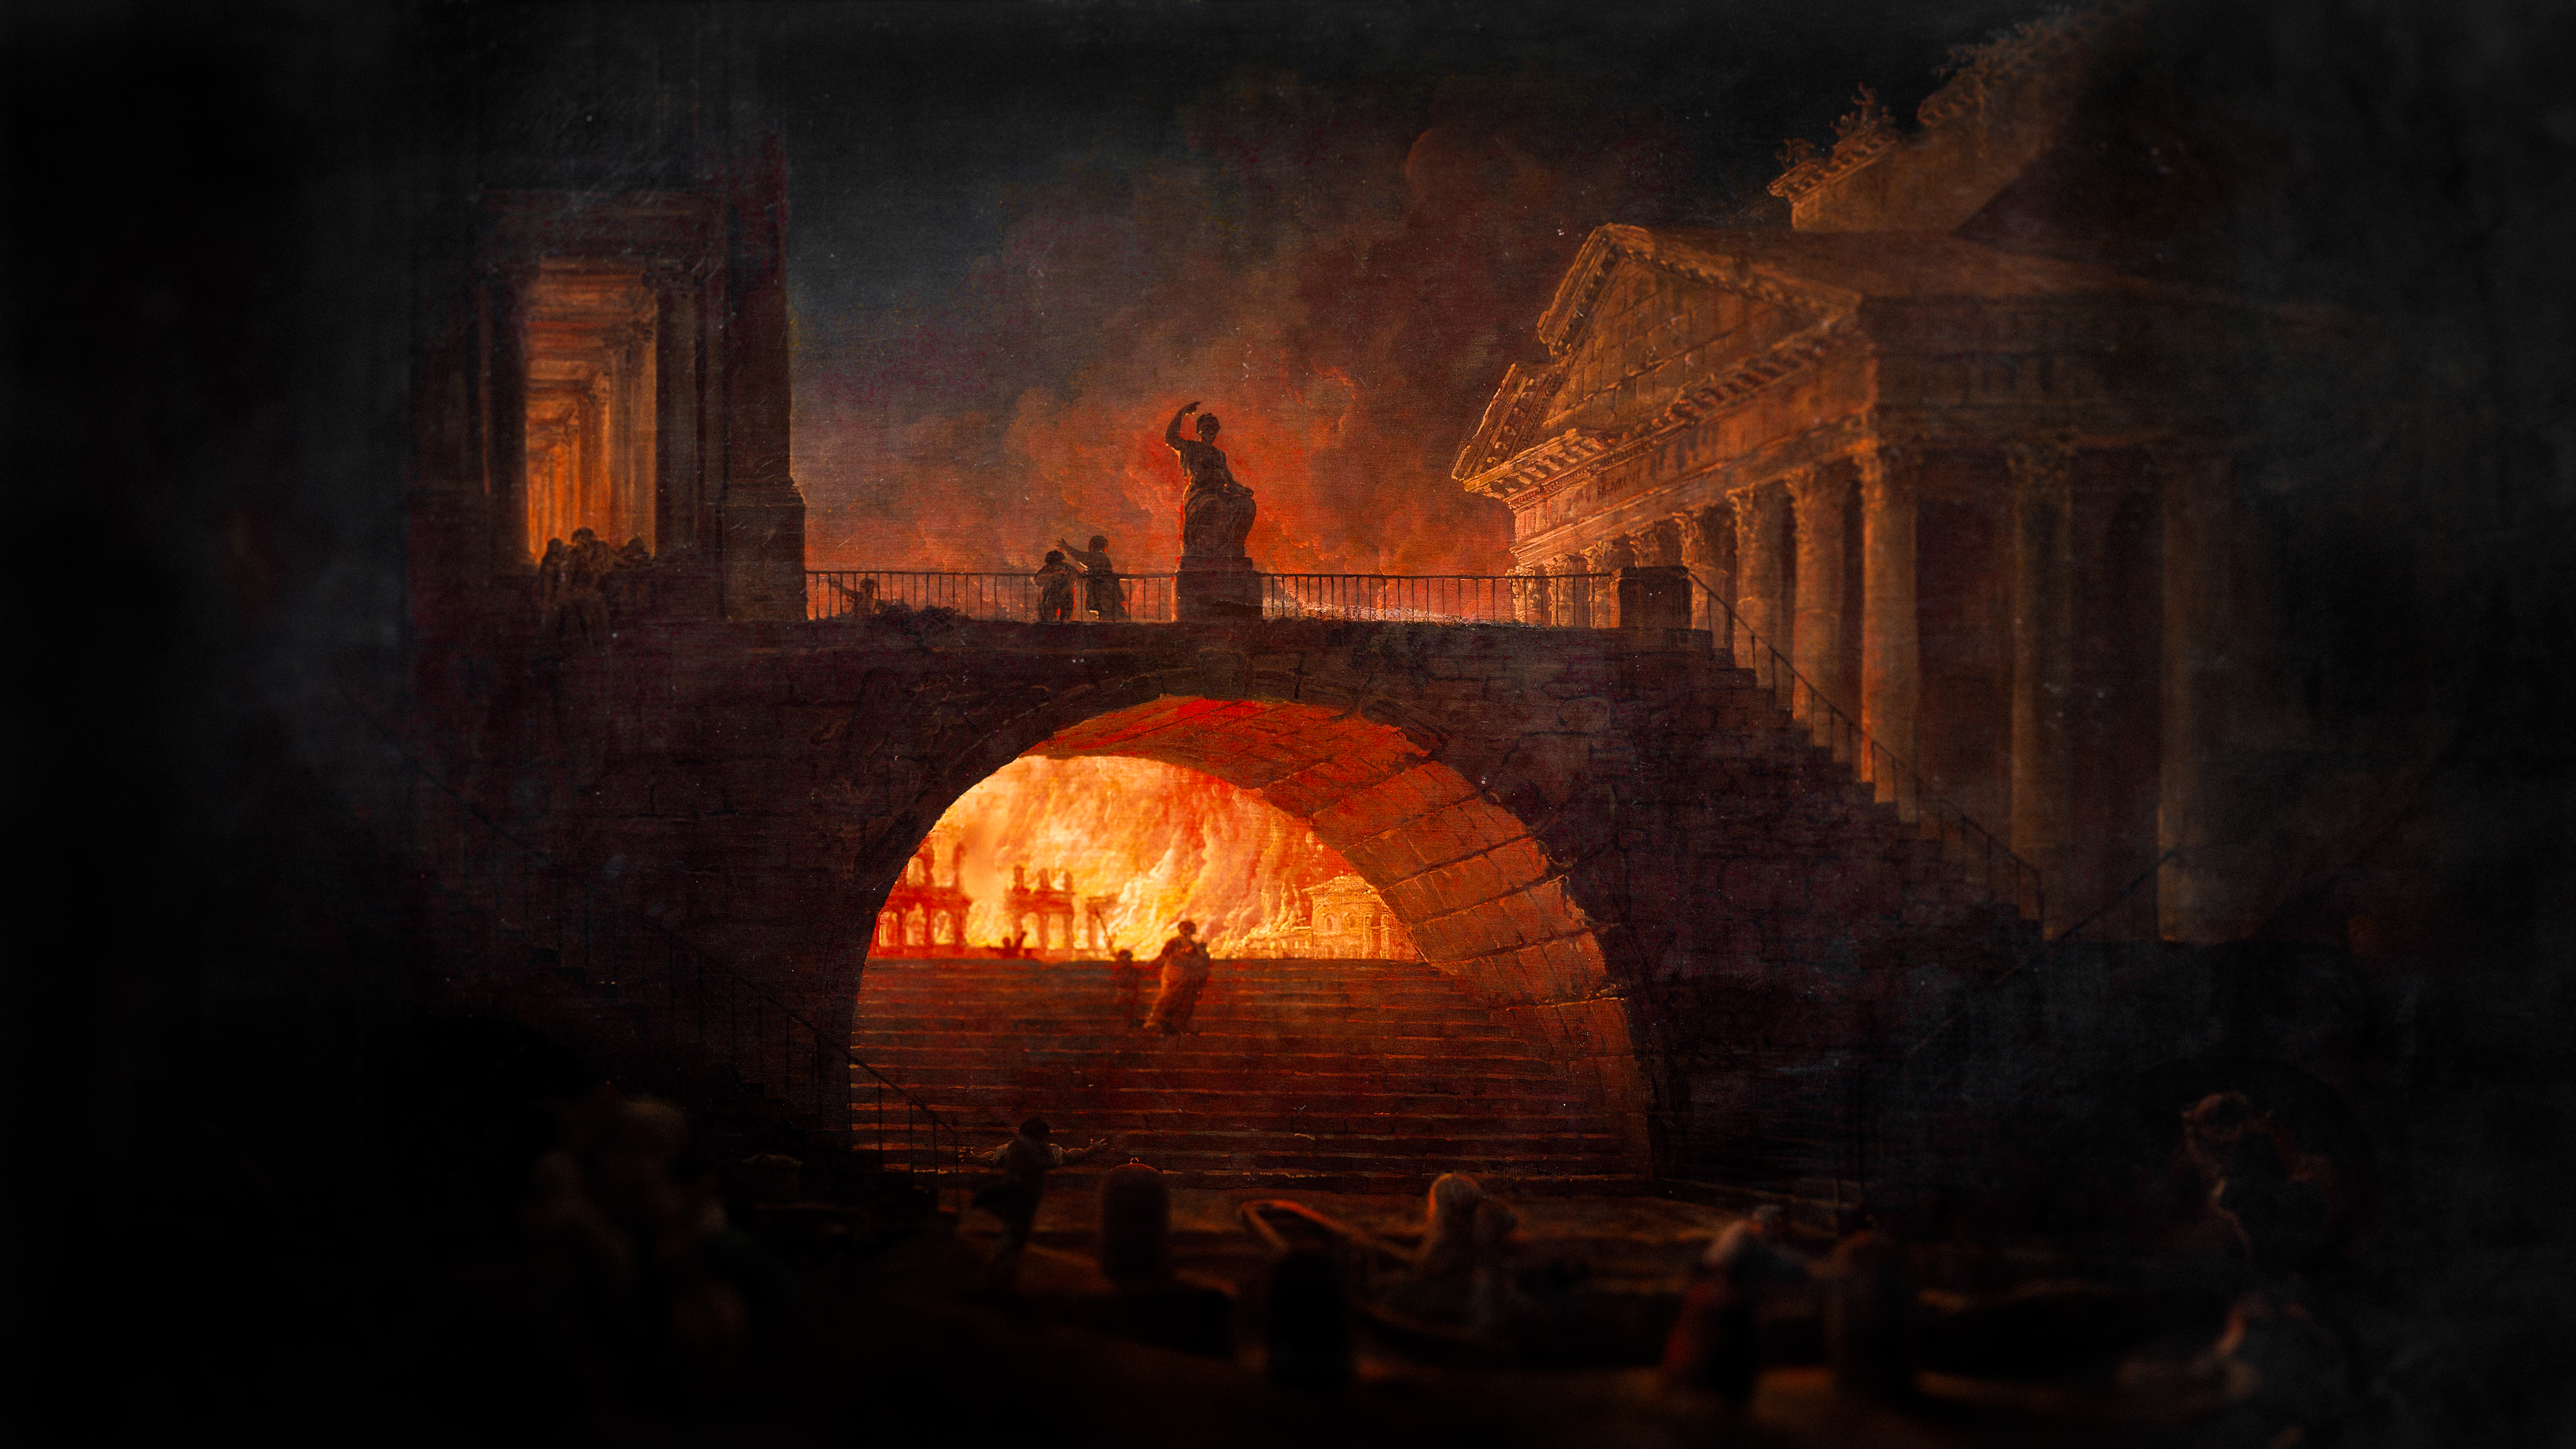 Painting Rome Burning Unforeseen Incidents Robert Bushway Digital Art Low Light 4530x2548